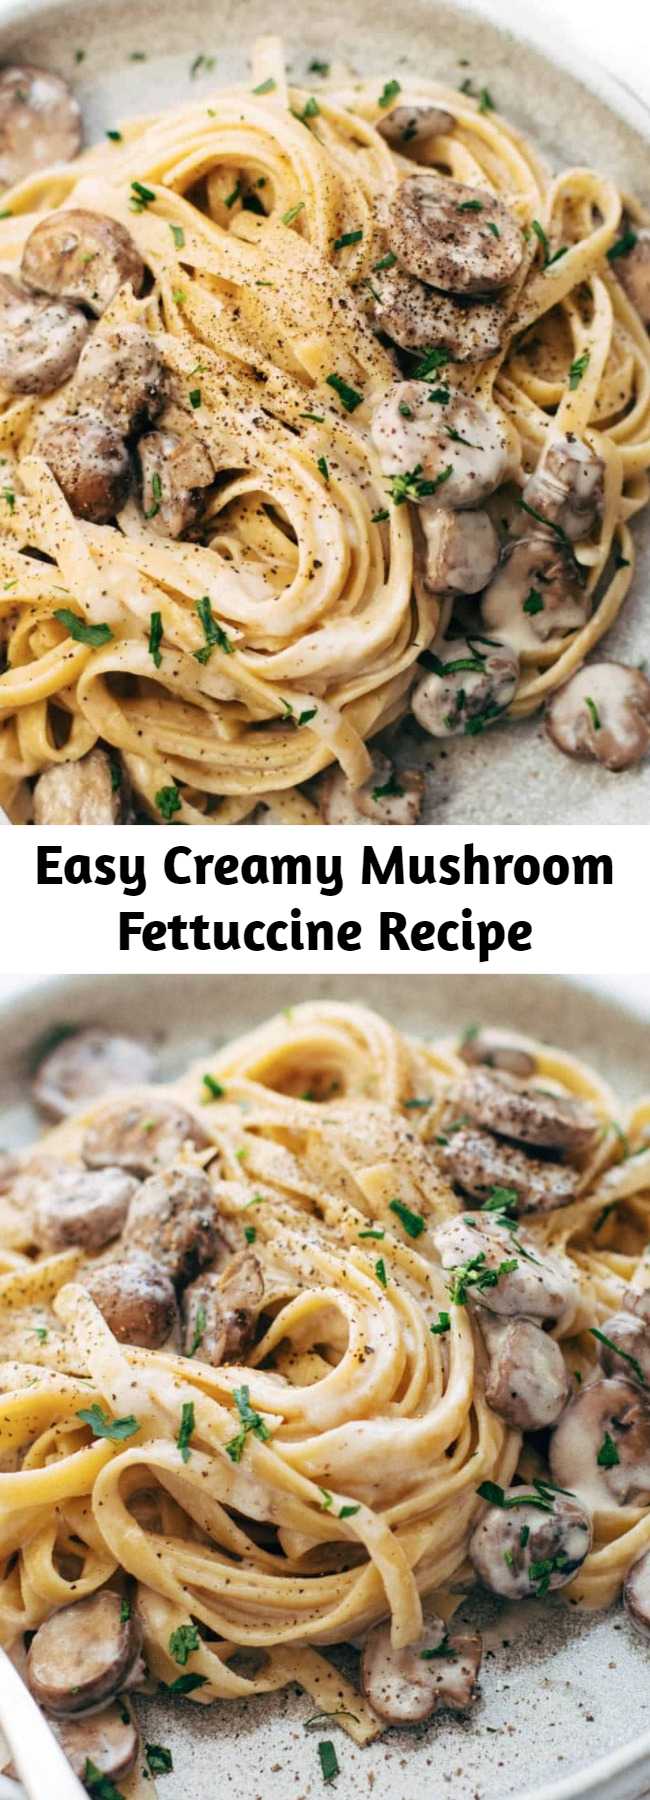 Easy Creamy Mushroom Fettuccine Recipe - Date Night Mushroom Fettuccine – elegant and luscious and FIVE INGREDIENT EASY. #mushroom #pasta #fettuccine #fettuccinealfredo #homemade #datenight #recipe